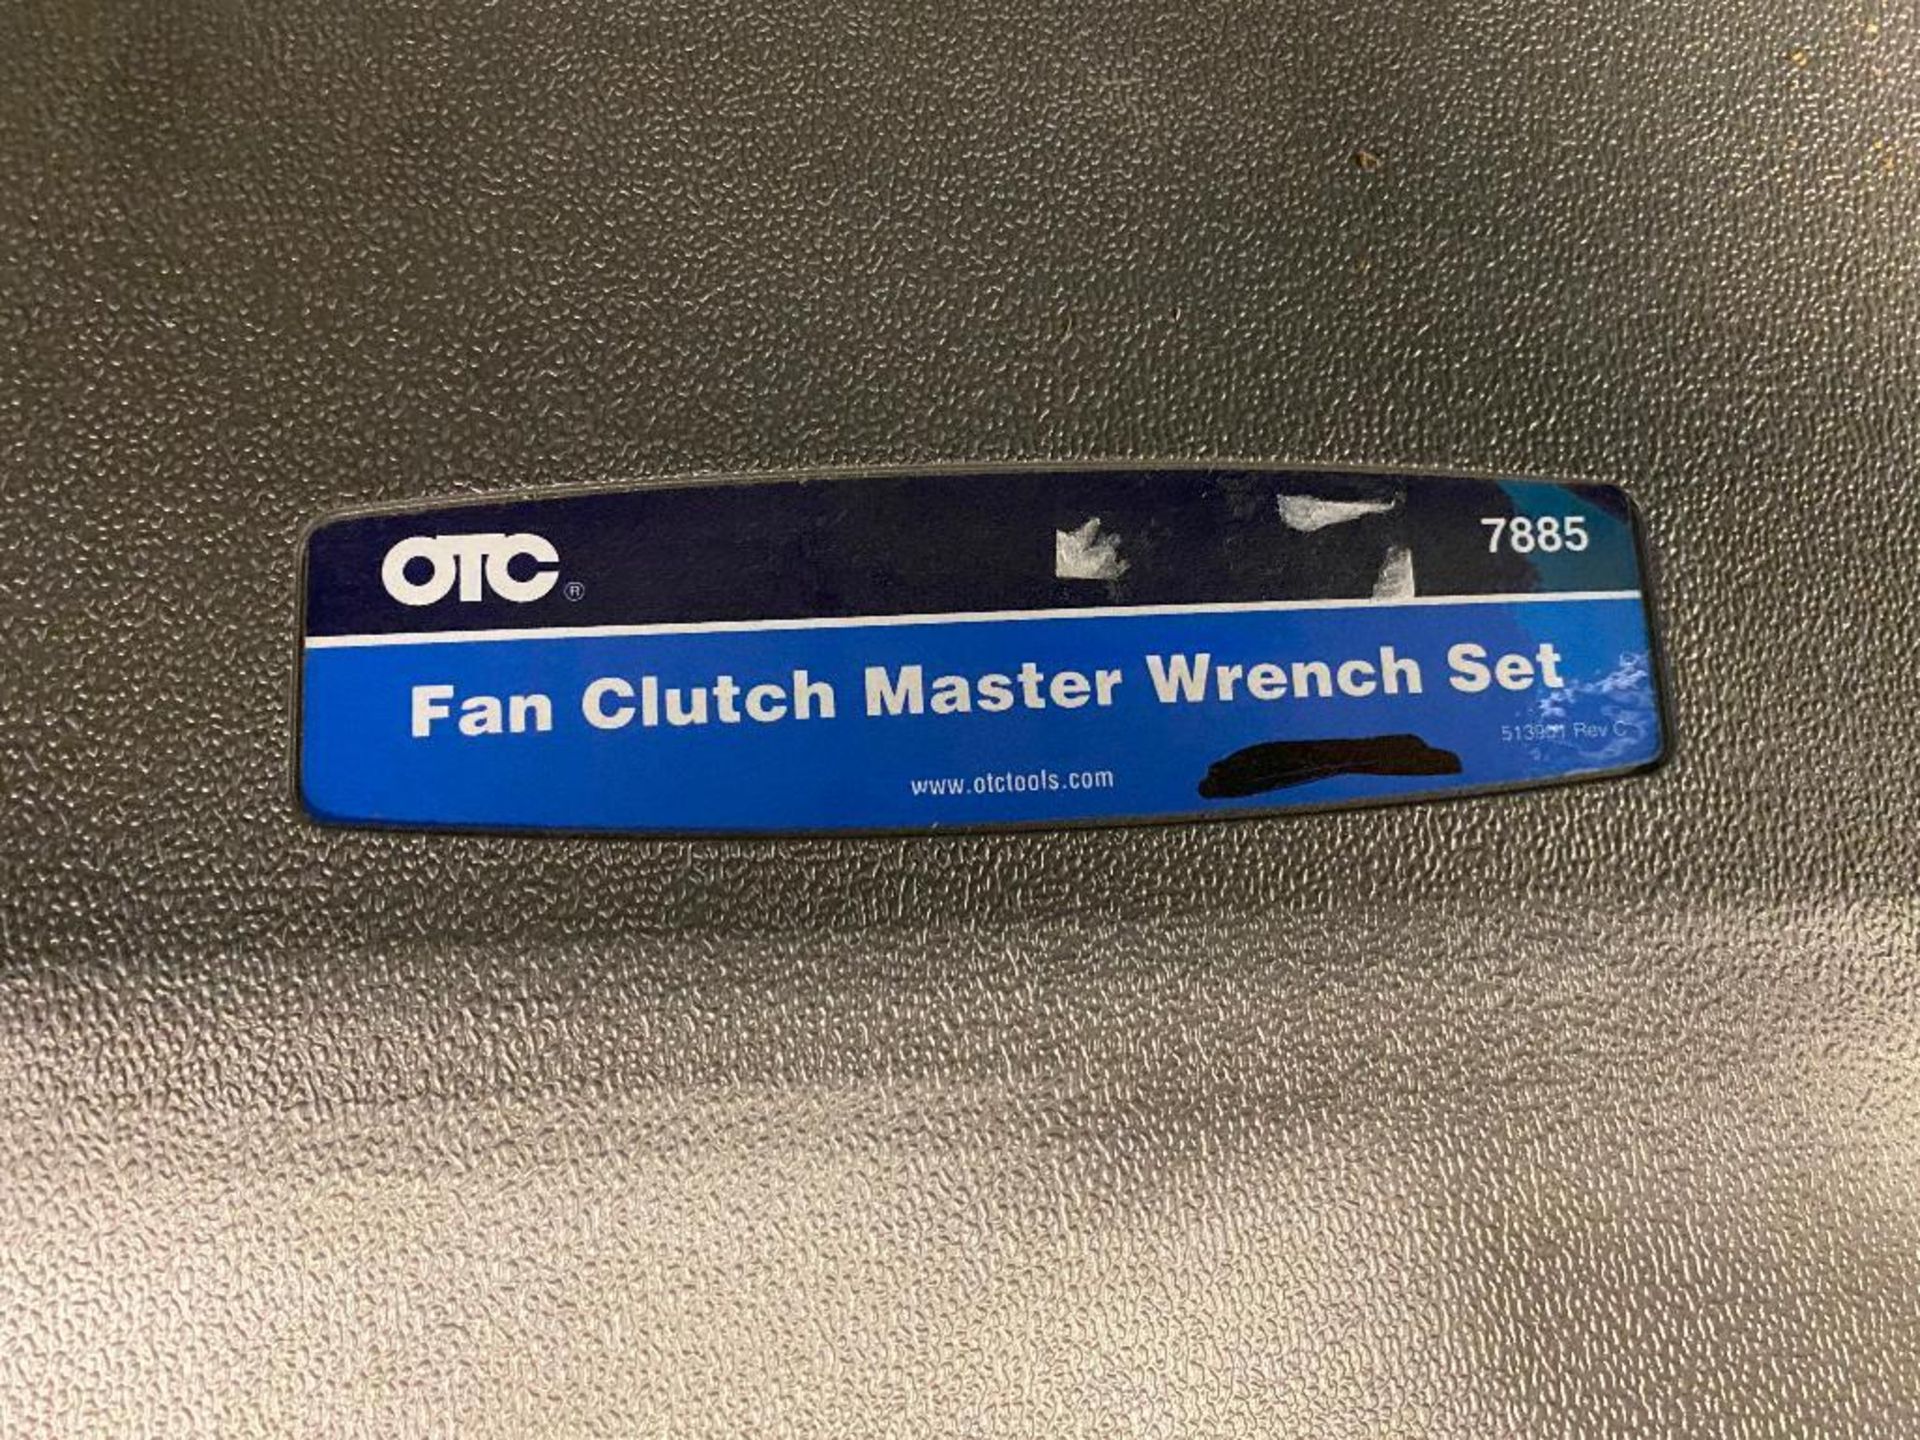 SPX OTC 7885 Fan Clutch Master Wrench Set - Image 3 of 3